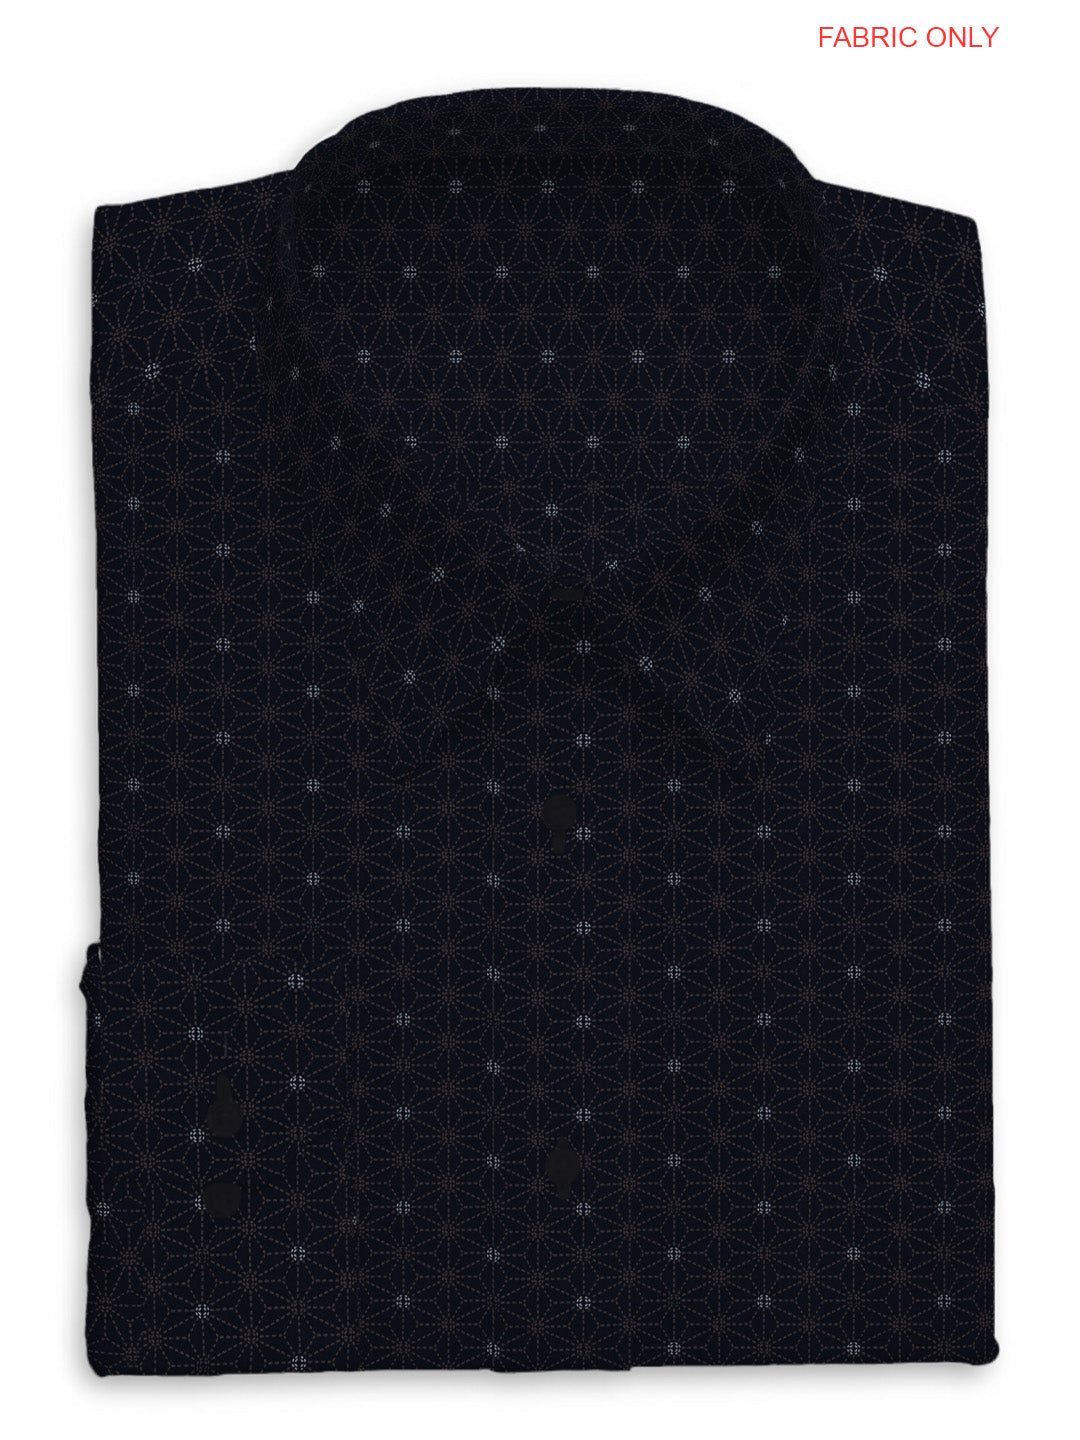 Cotton Blend Black Colour All-over Print Shirt Fabric ALPHA